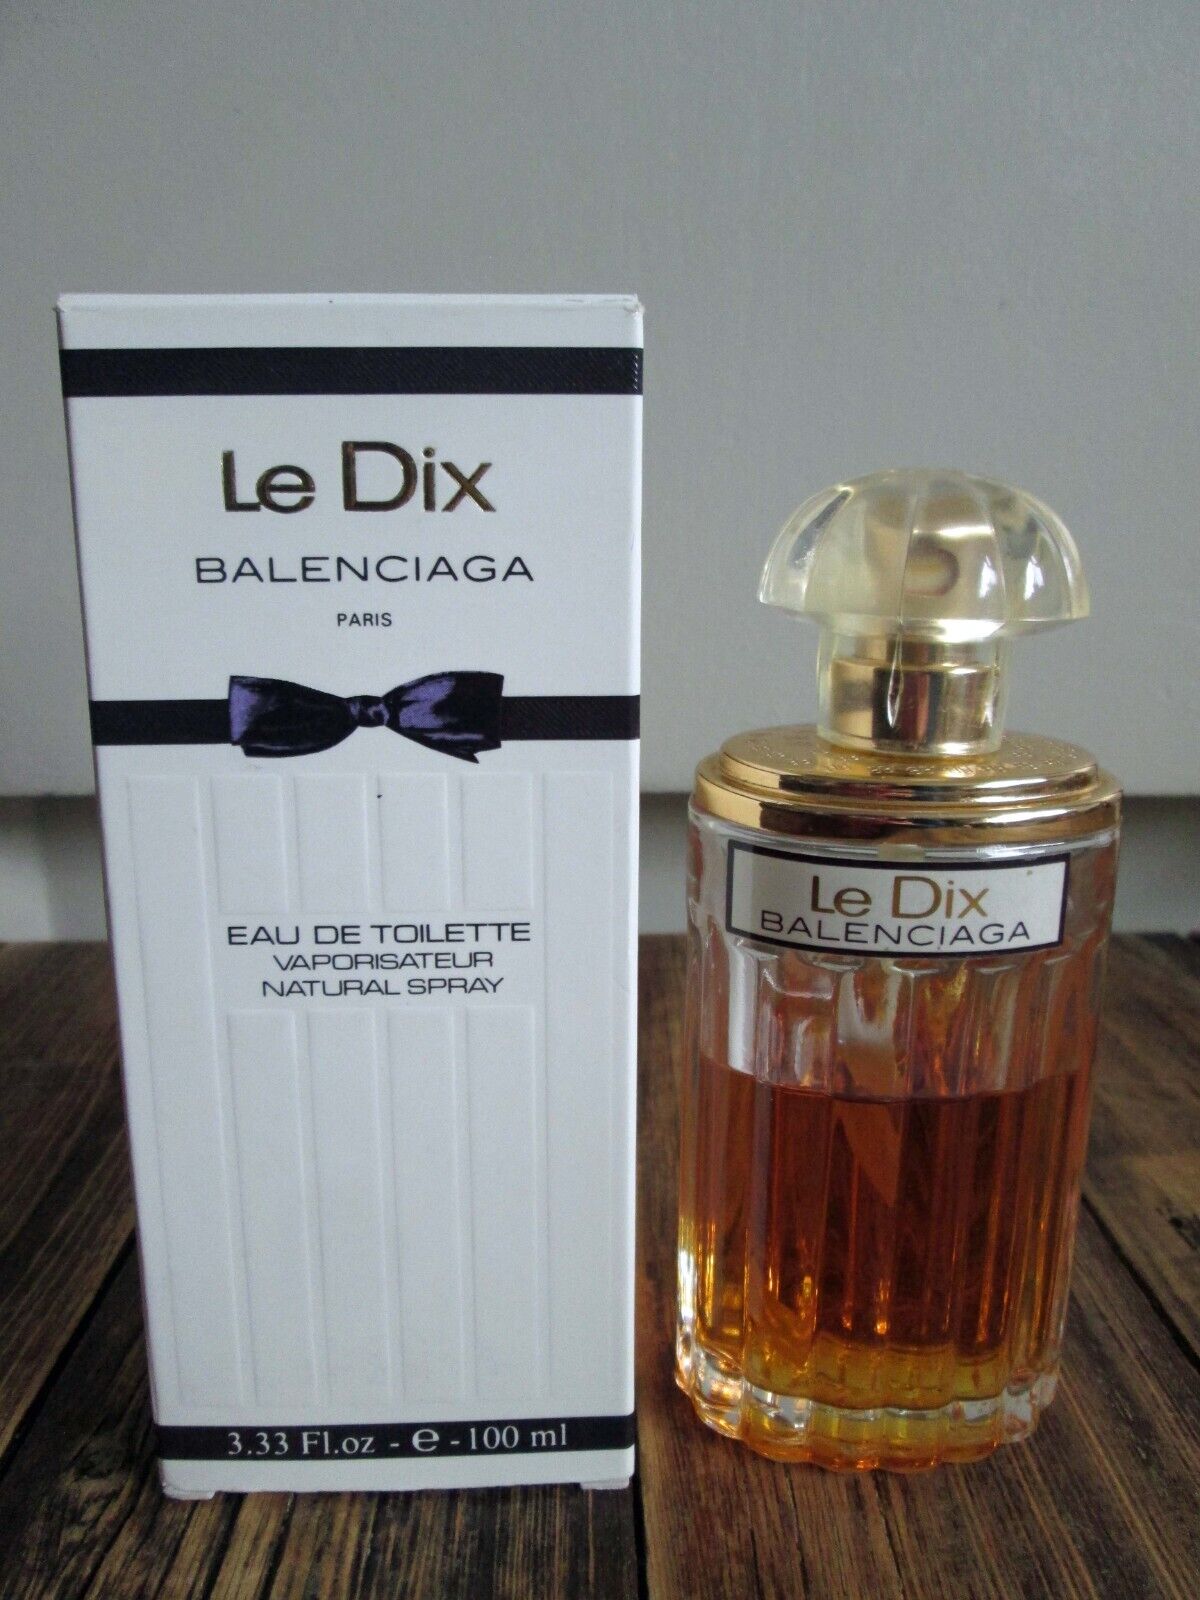 Le Dix Balenciaga Paris 3.33 oz.  EAU DE Toilette Natural Spray 60% Full w/ Box